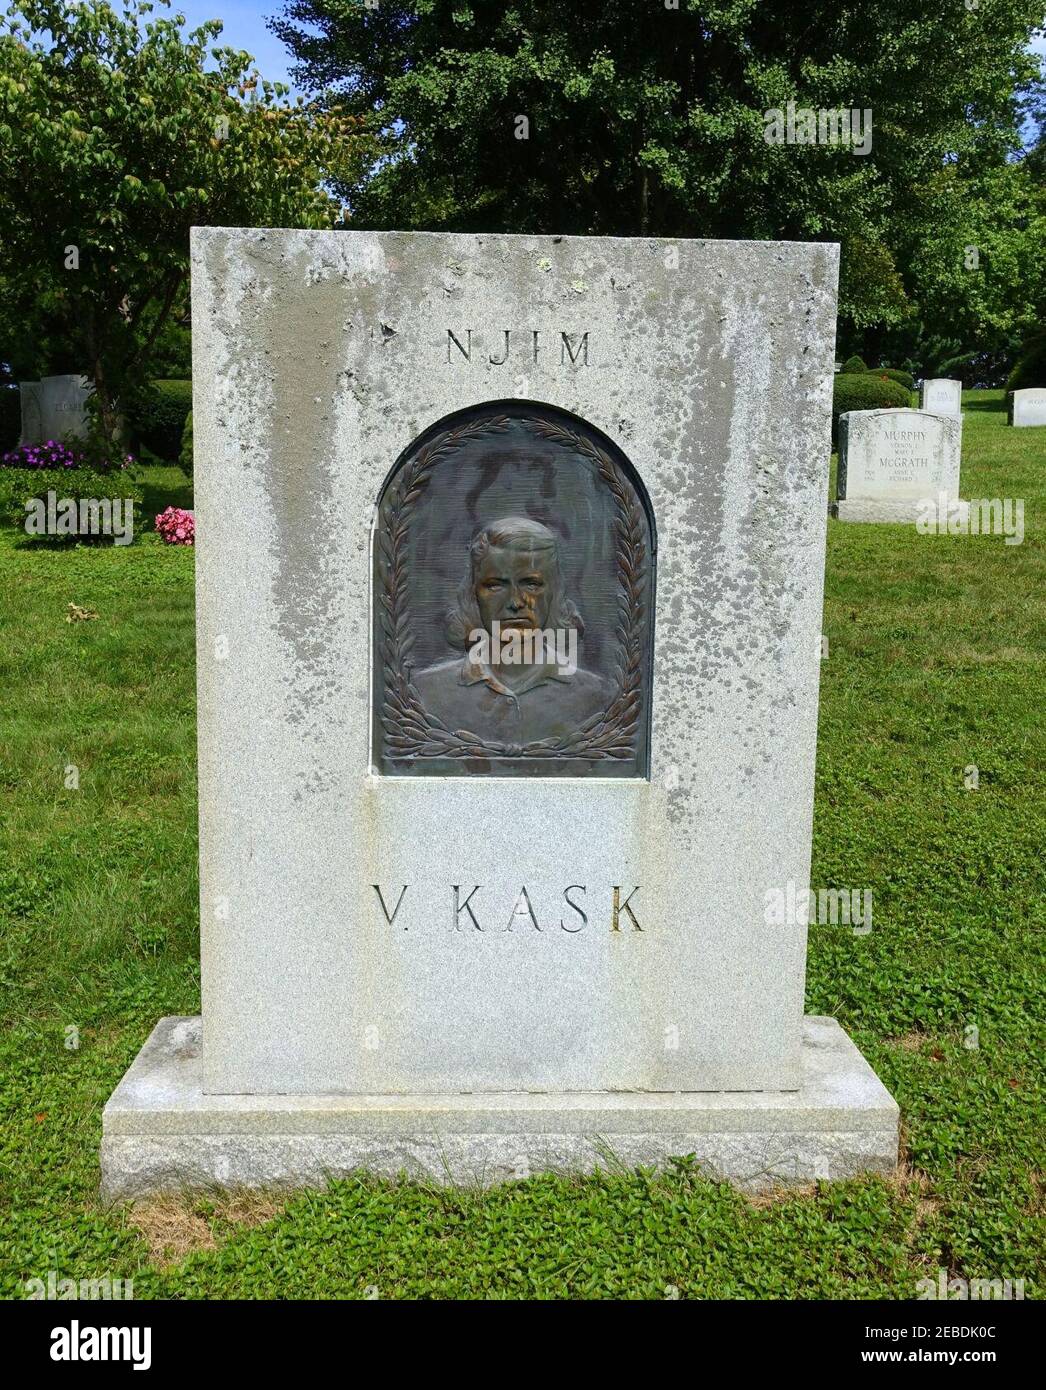 Njim V. Kask - Newton Cemetery & Arboretum - Newton Center, MA - Stock Photo